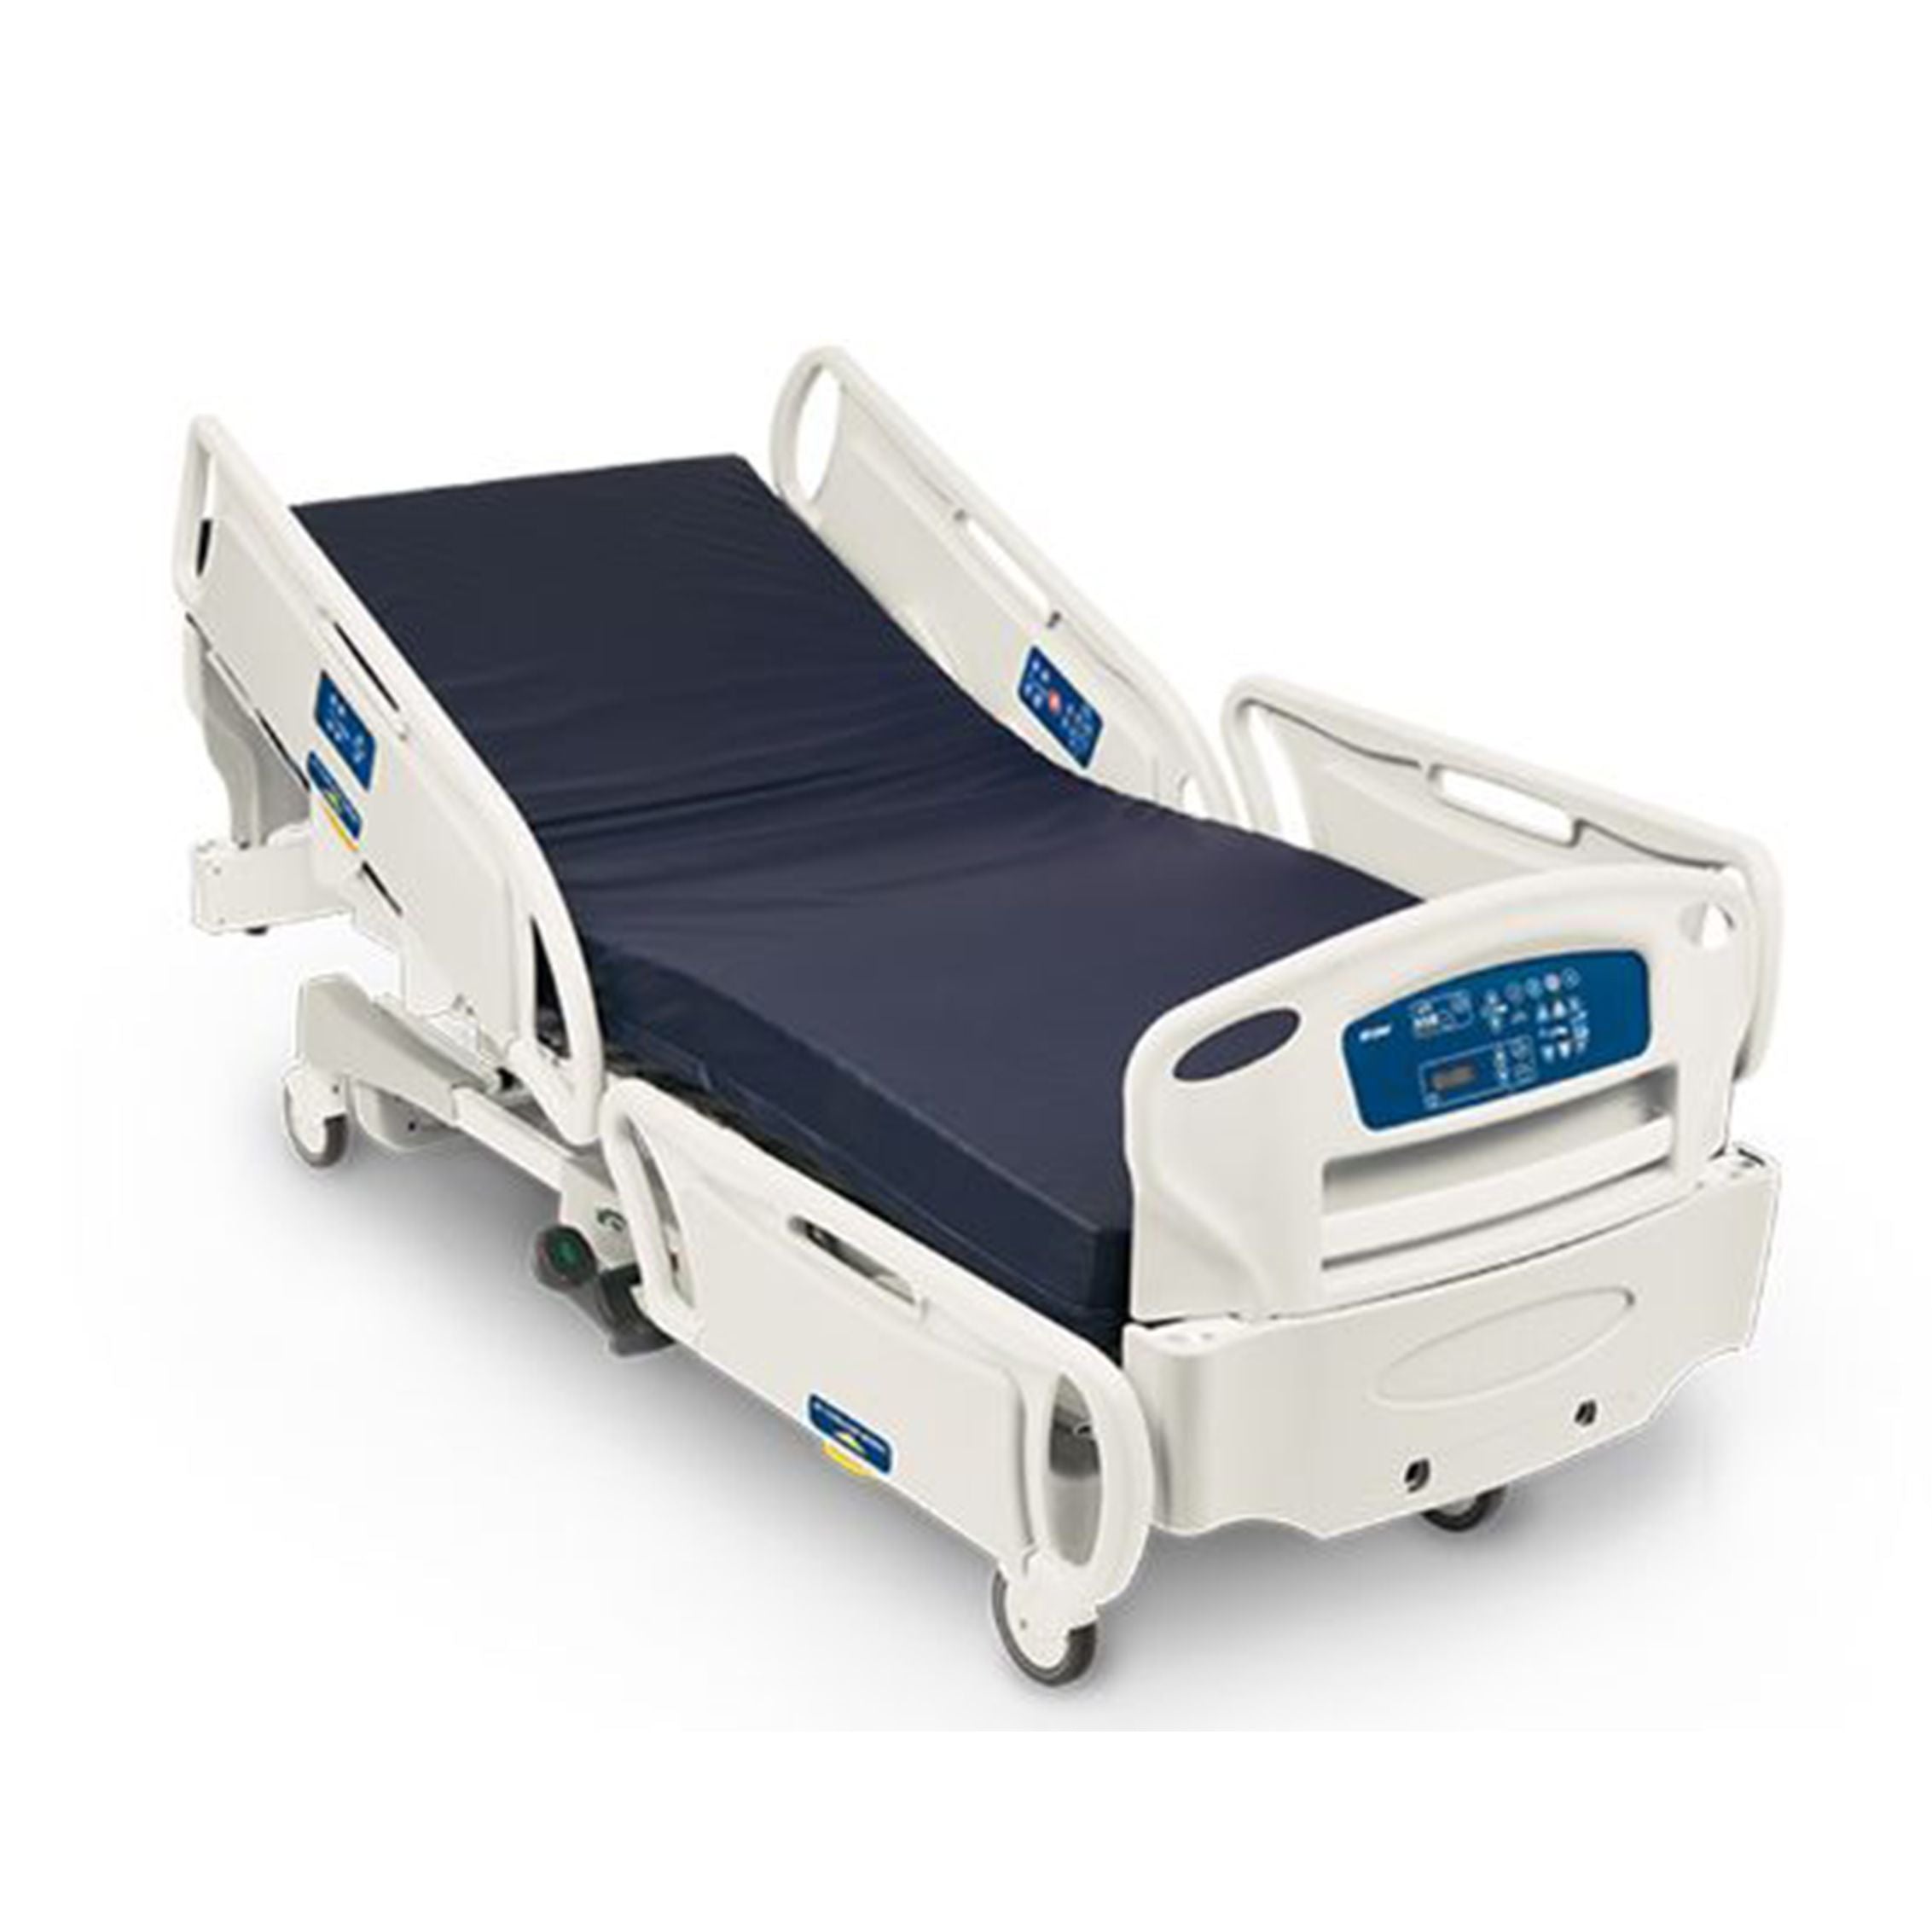 Stryker GoBed II Hospital Bed